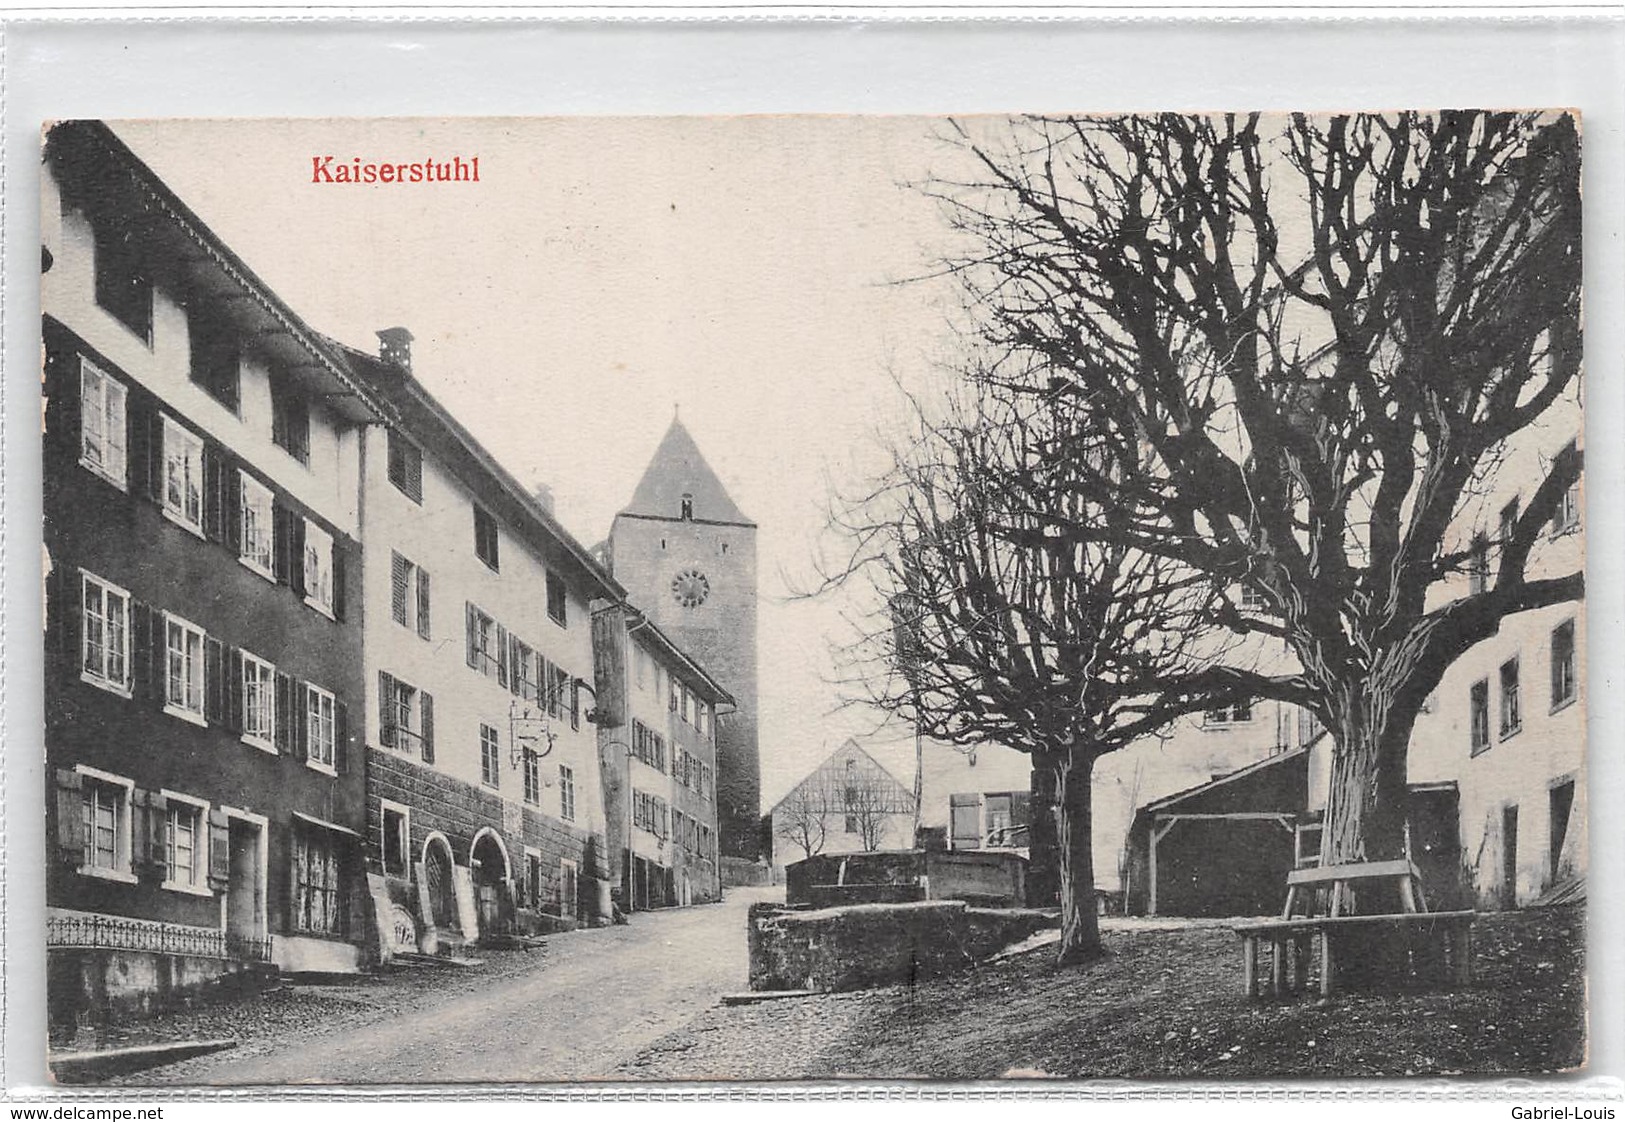 Kaiserstuhl - Kaiserstuhl